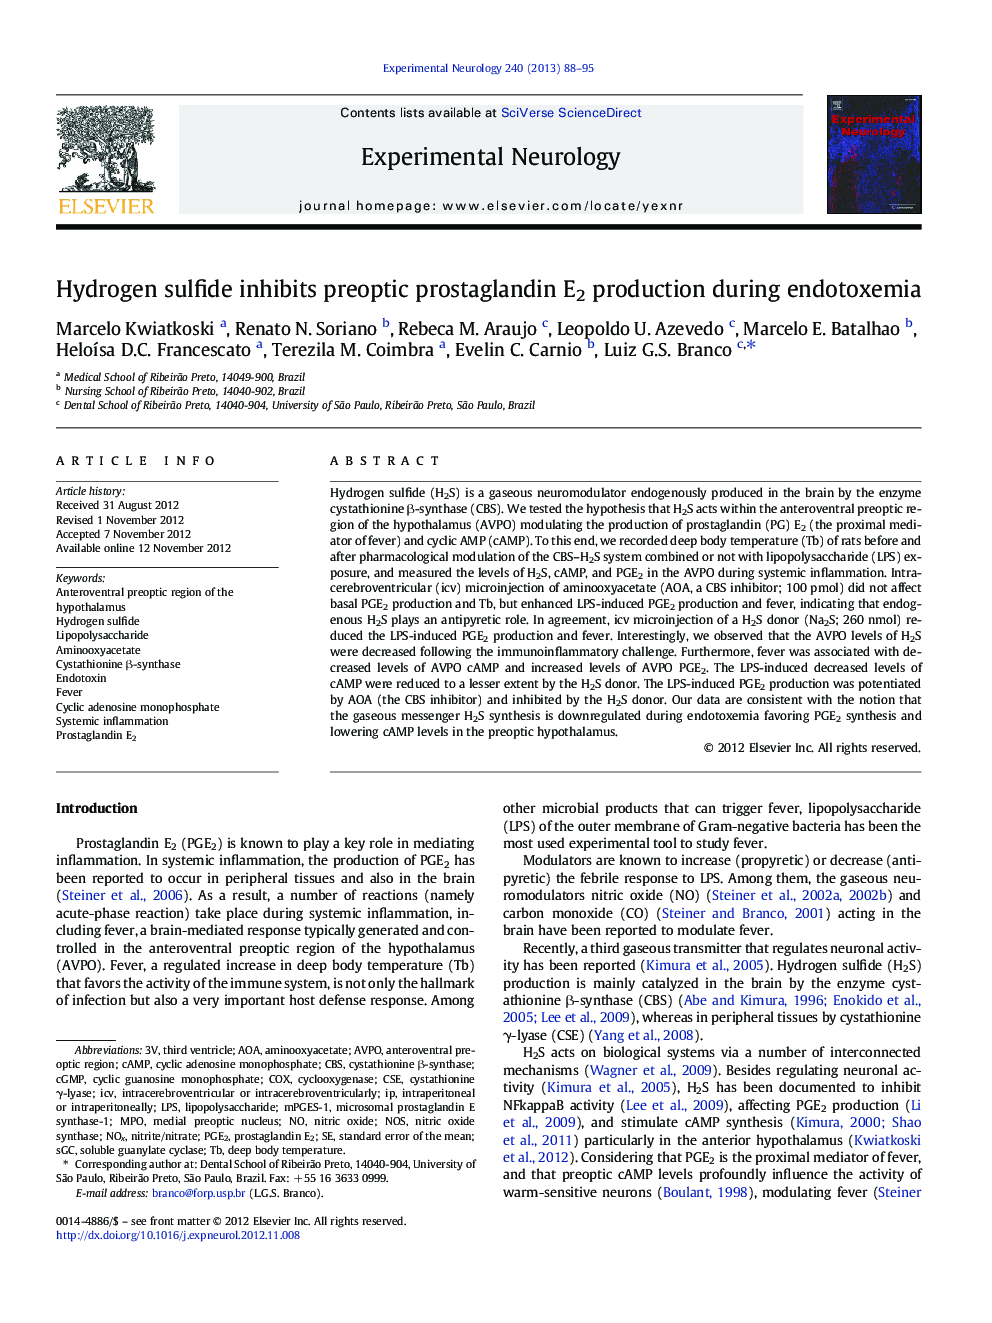 Hydrogen sulfide inhibits preoptic prostaglandin E2 production during endotoxemia